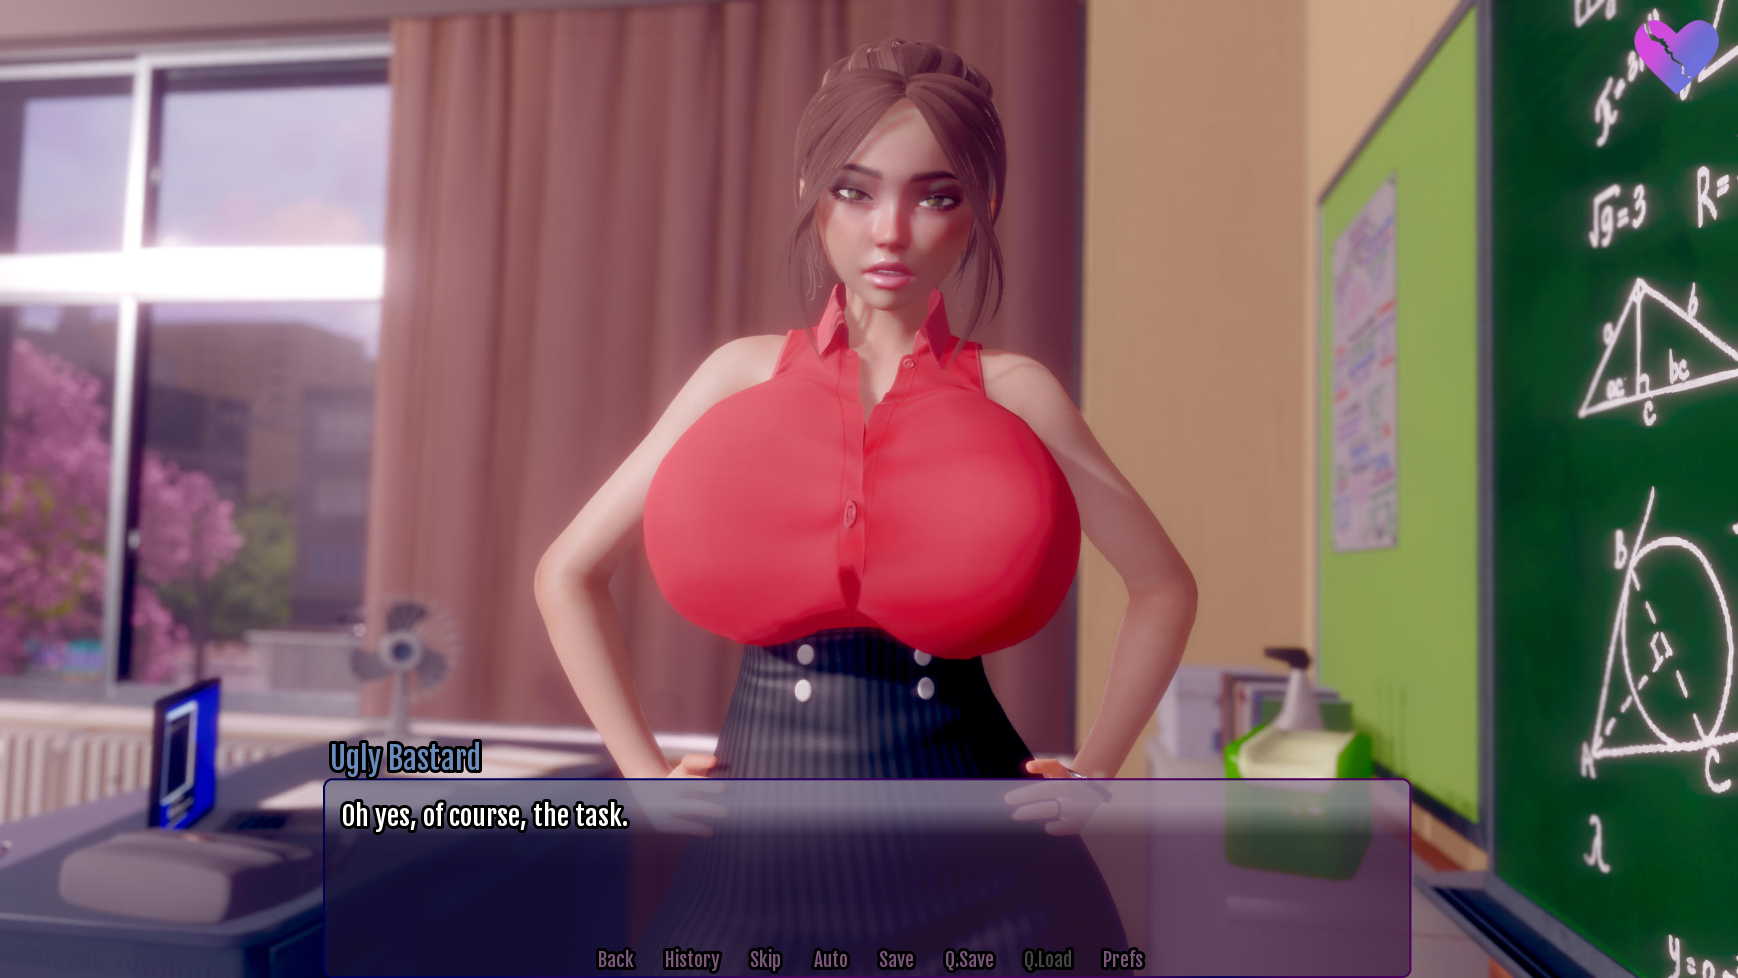 Big Tits Game Download - Twisted Memories v0.1 - free game download, reviews, mega - xGames